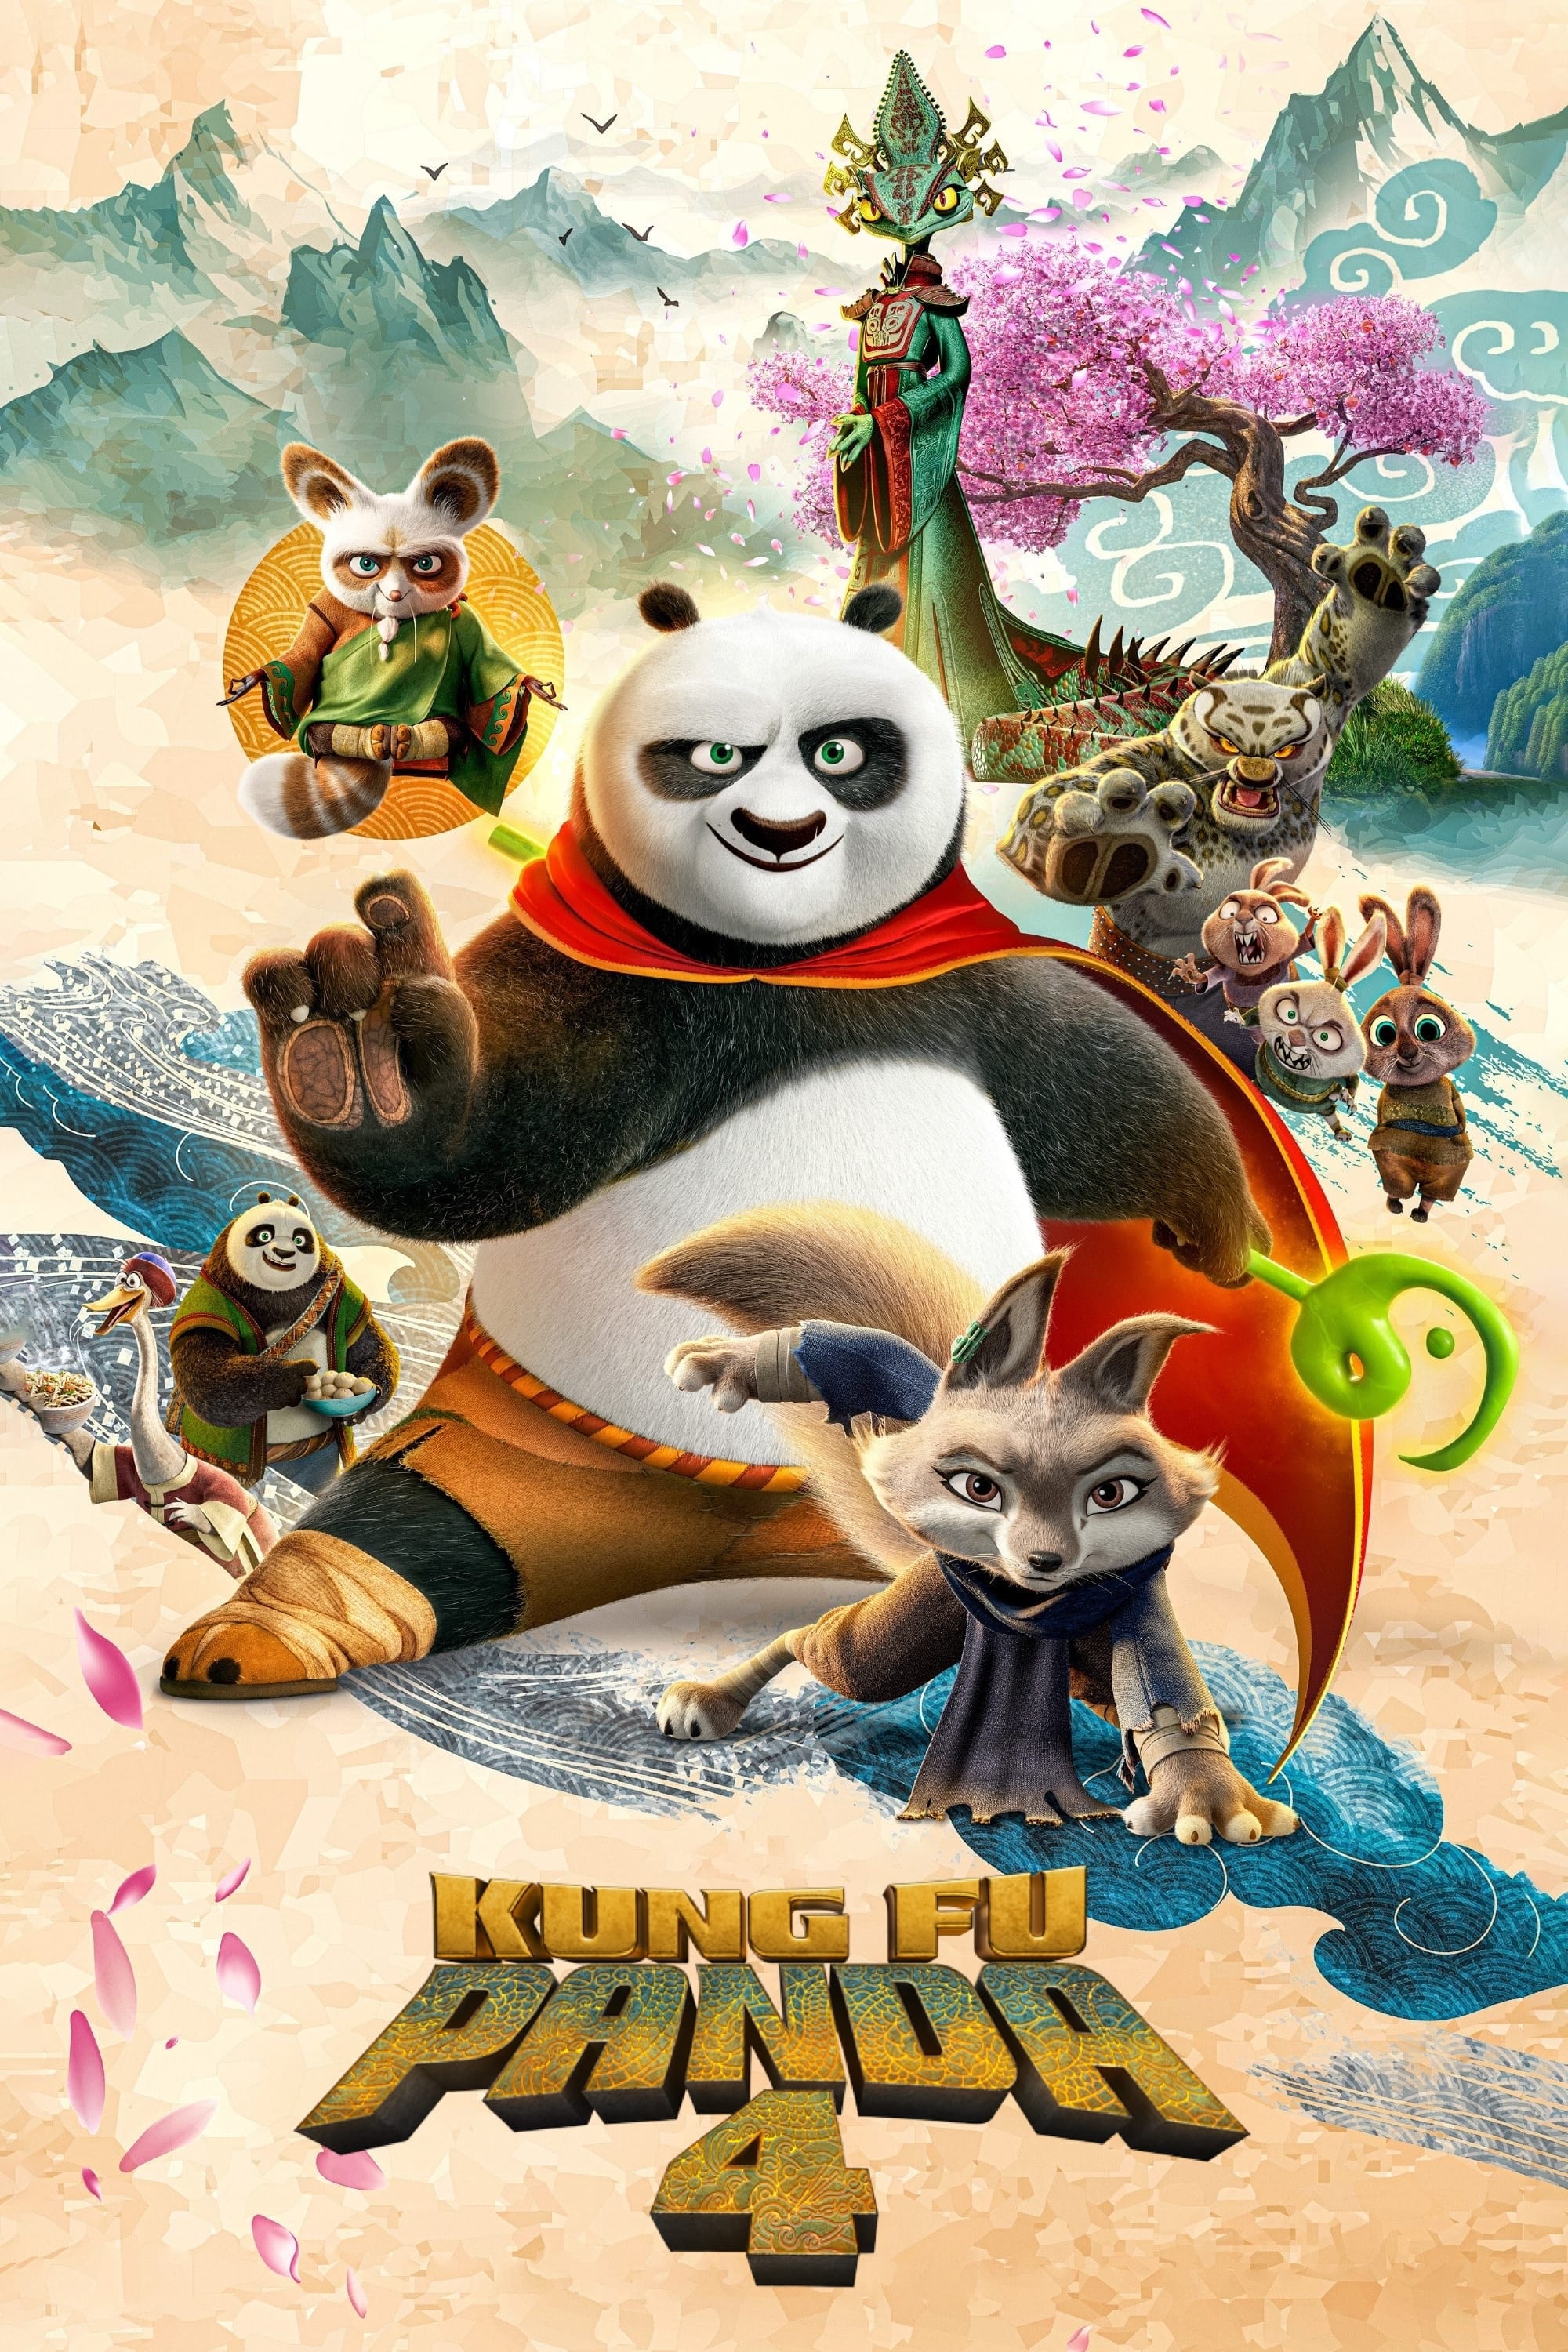 videa-kung-fu-panda-4-teljes-film-hd.statuspage.io